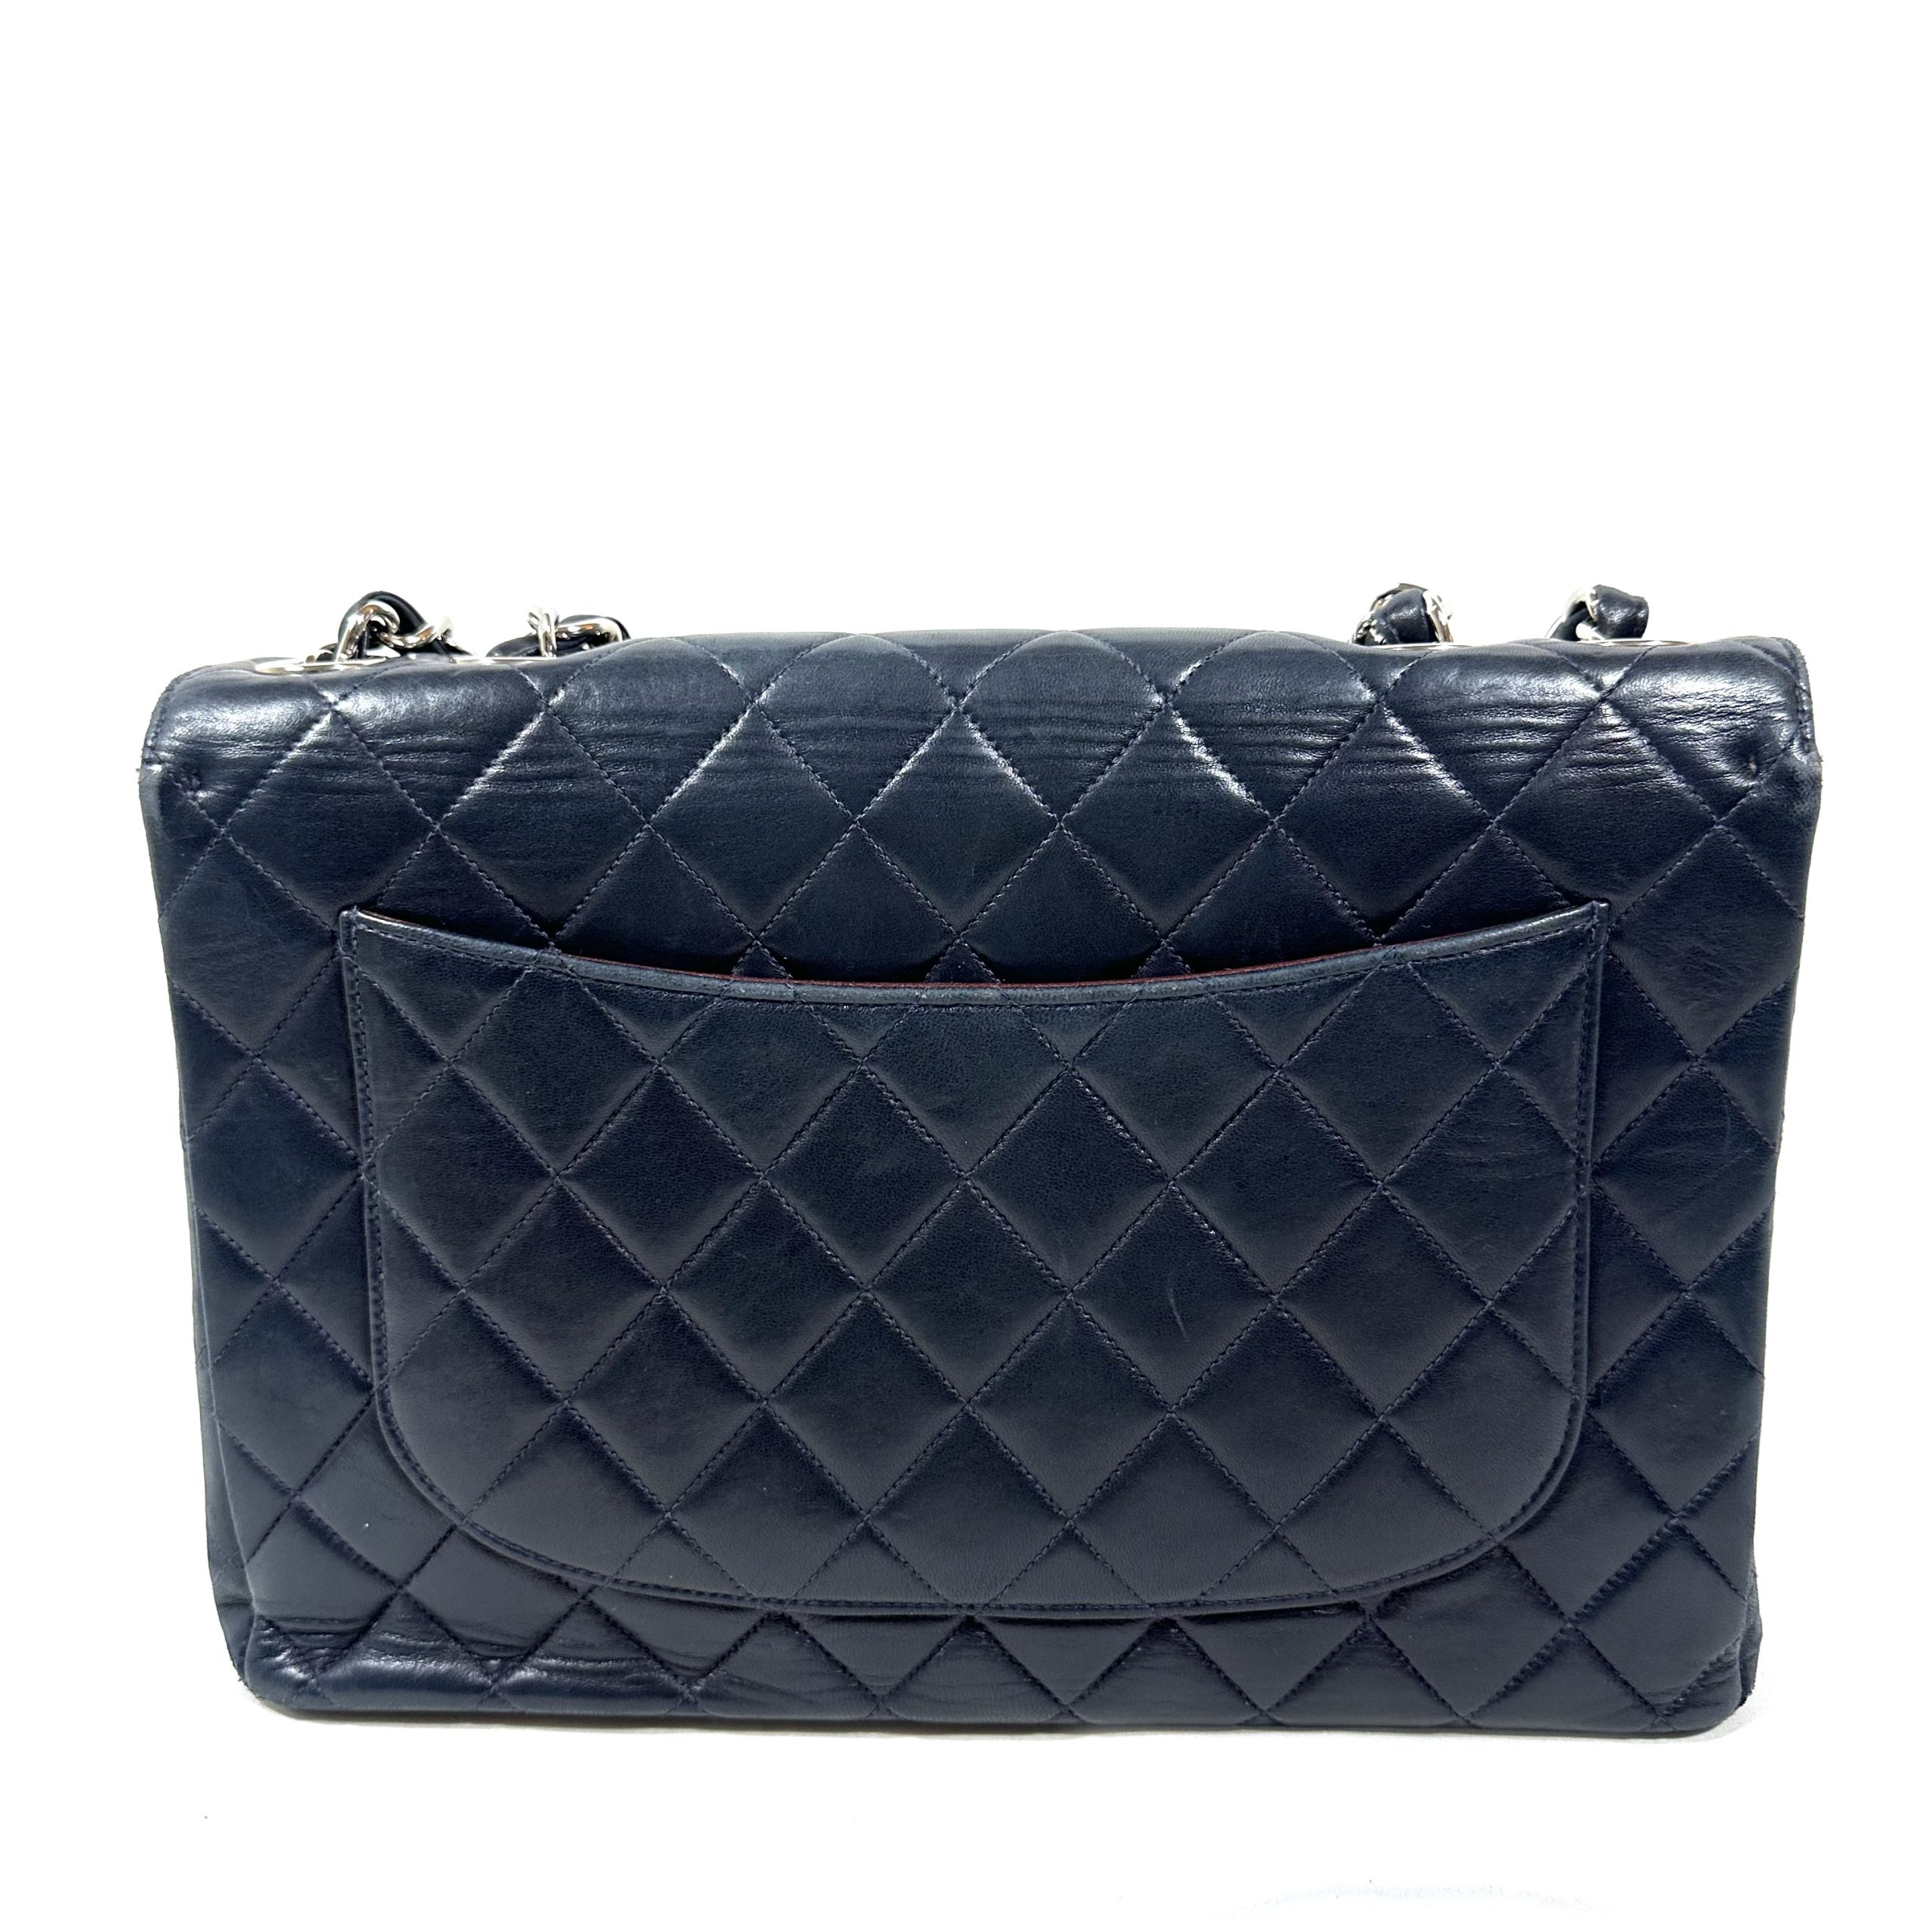 Bolsa Chanel Original Quilted Perforated Leather Single Flap Jumbo Feminina